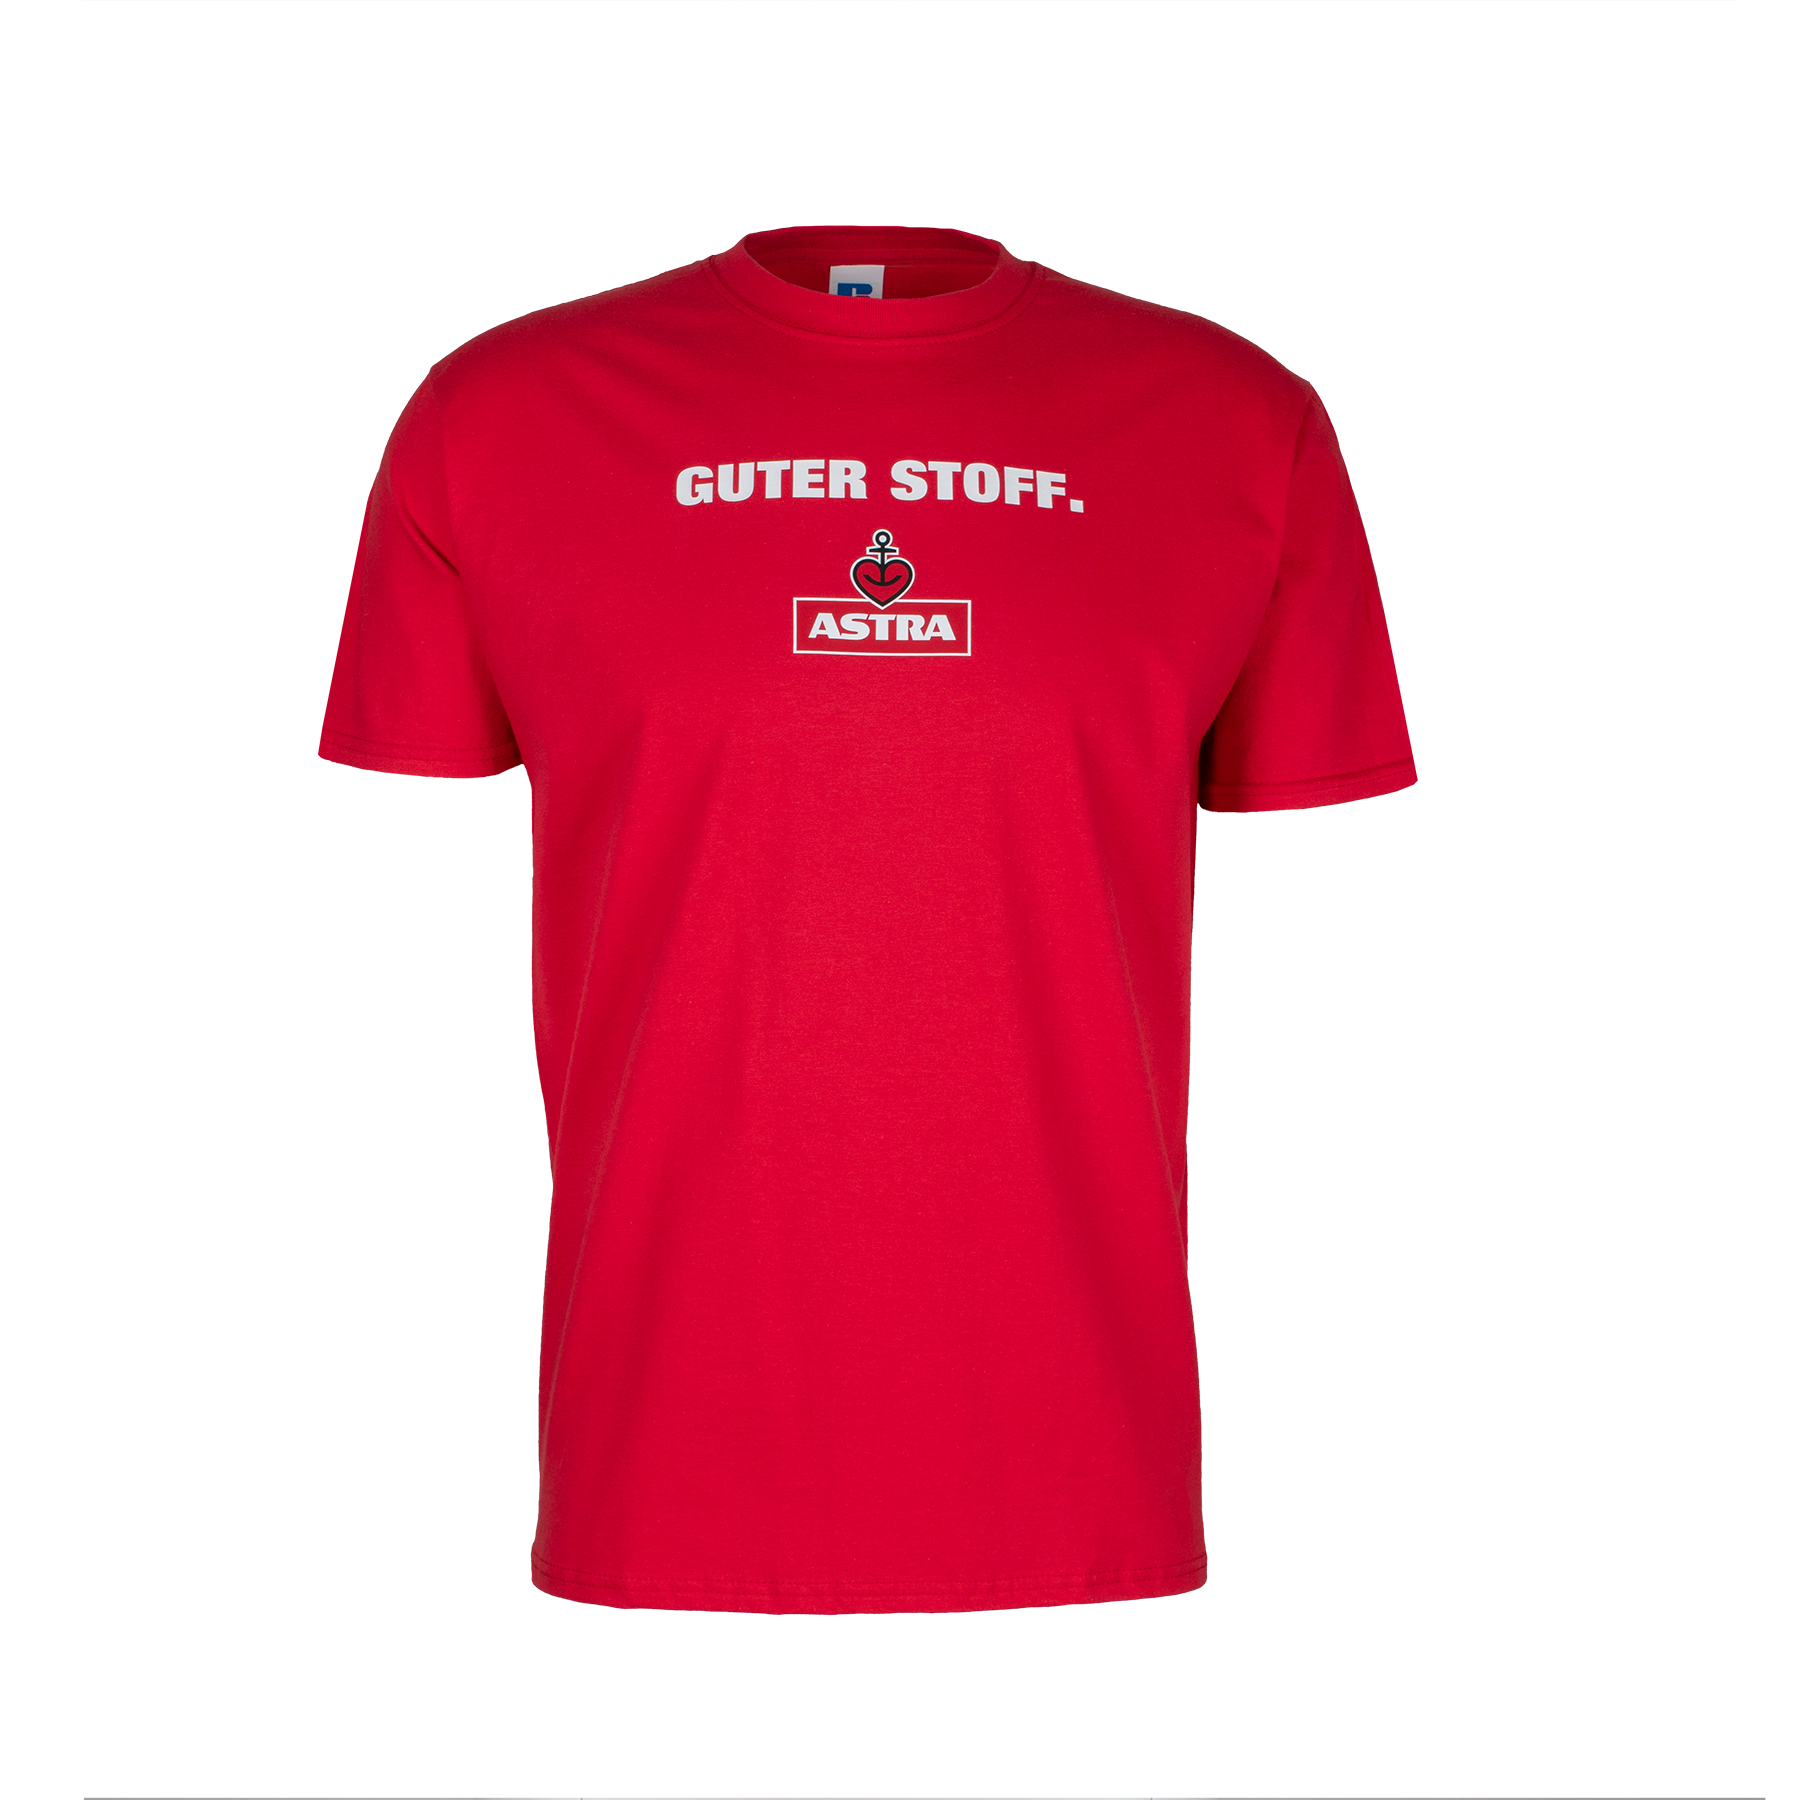 Astra T-Shirt "Guter Stoff"